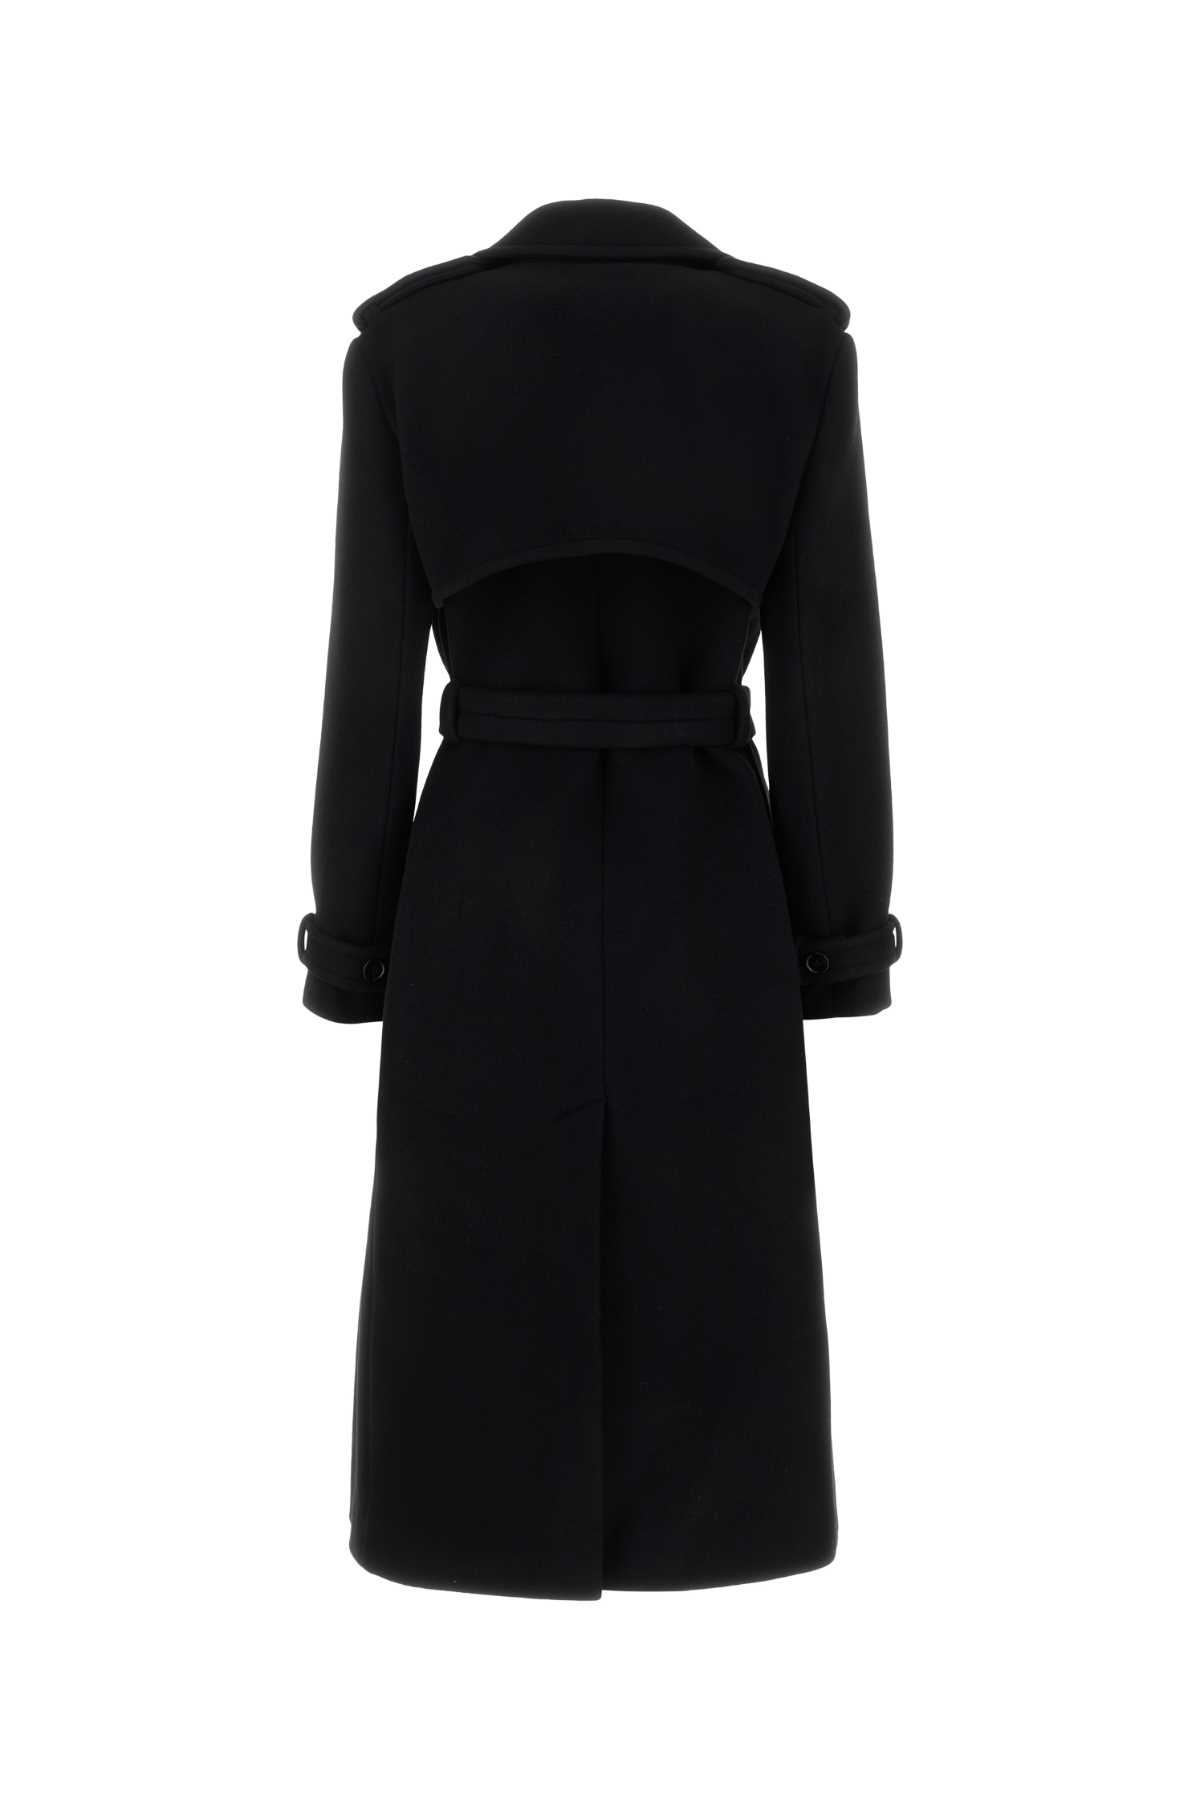 Chloé Black Wool Blend Coat